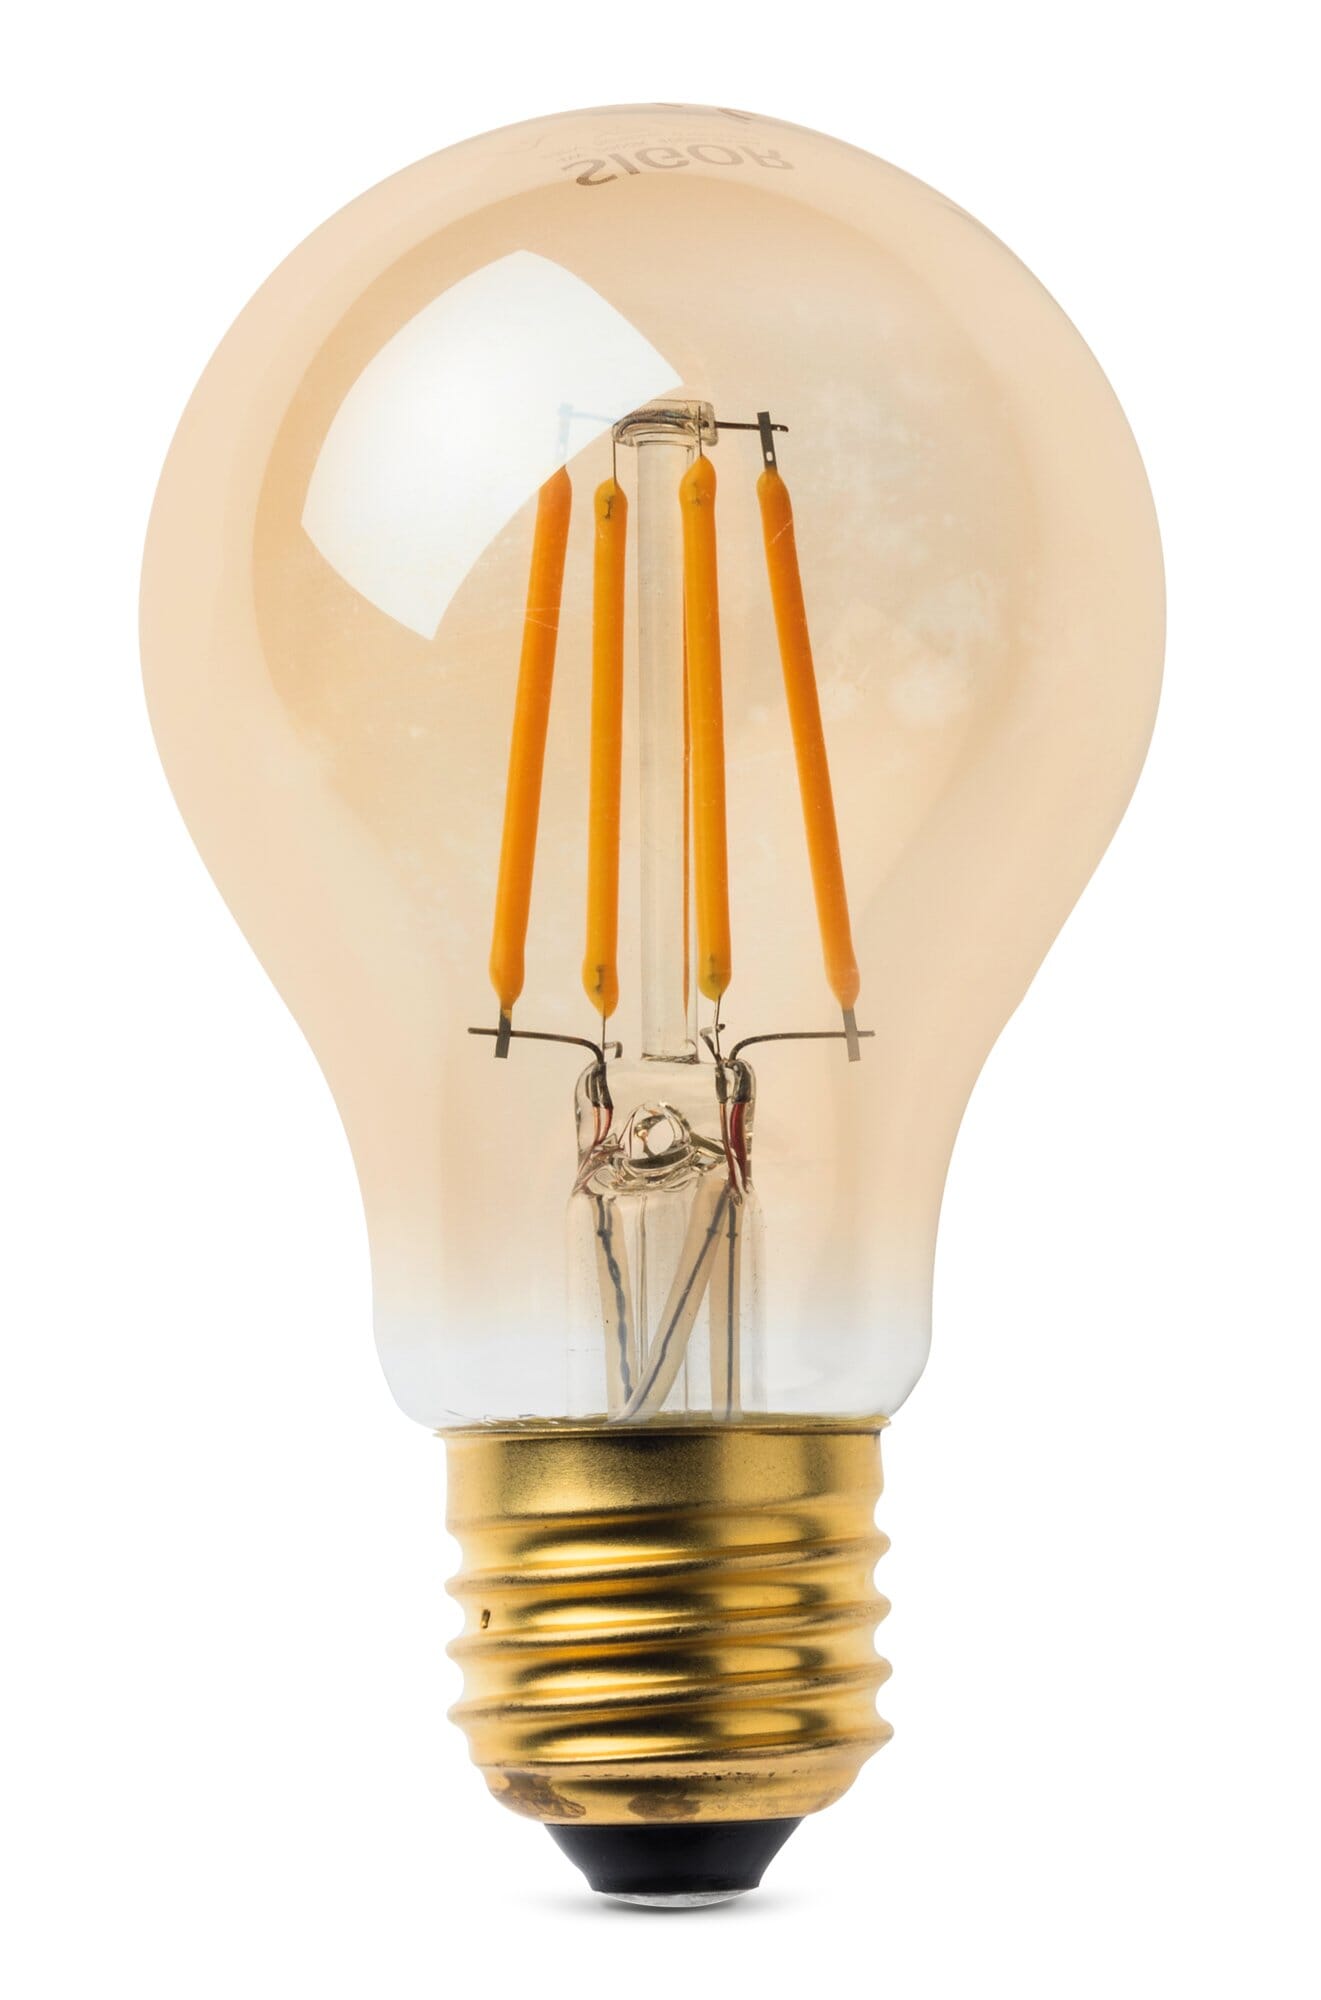 Sigor Licht. LED filament lamps